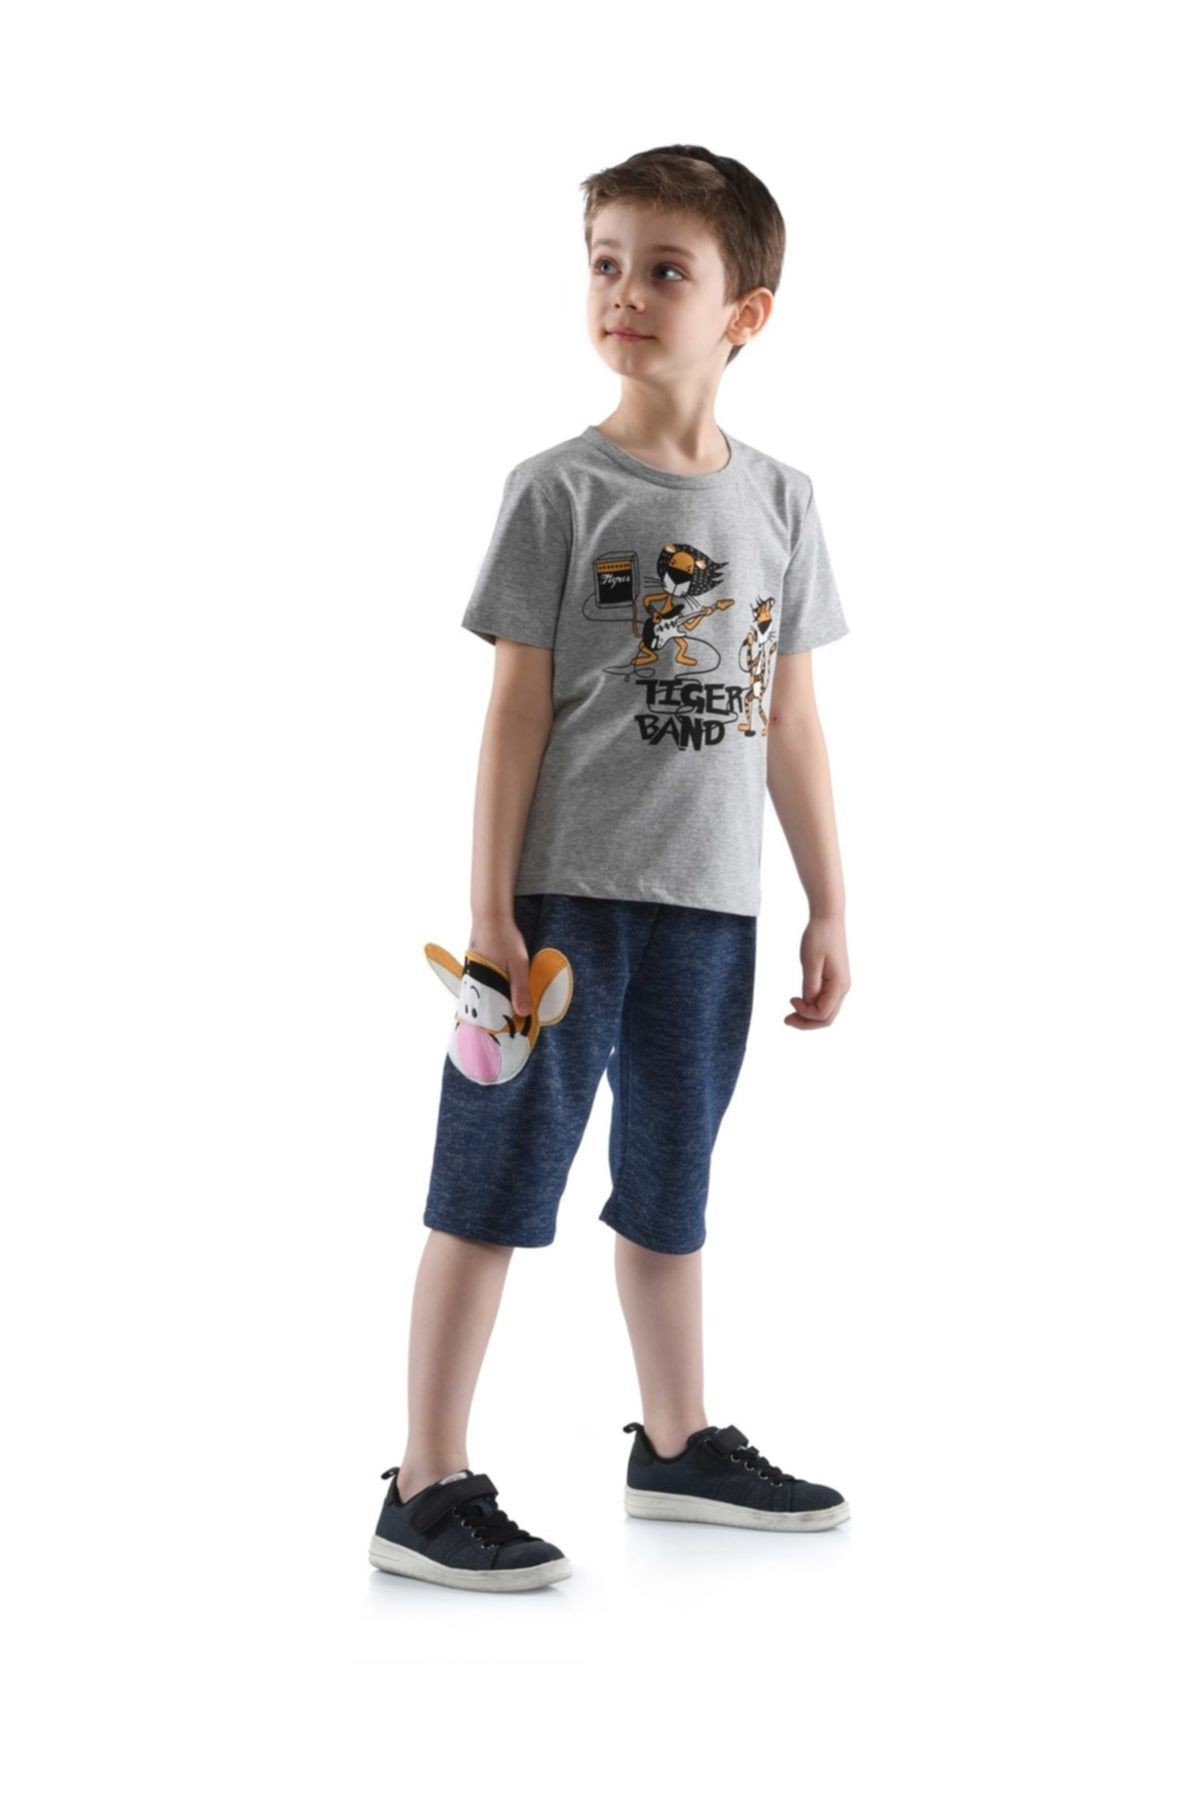 Cute Crazy Erkek Kaplan Lacivert Şort & Gri T-shirt Takım Cc-set185